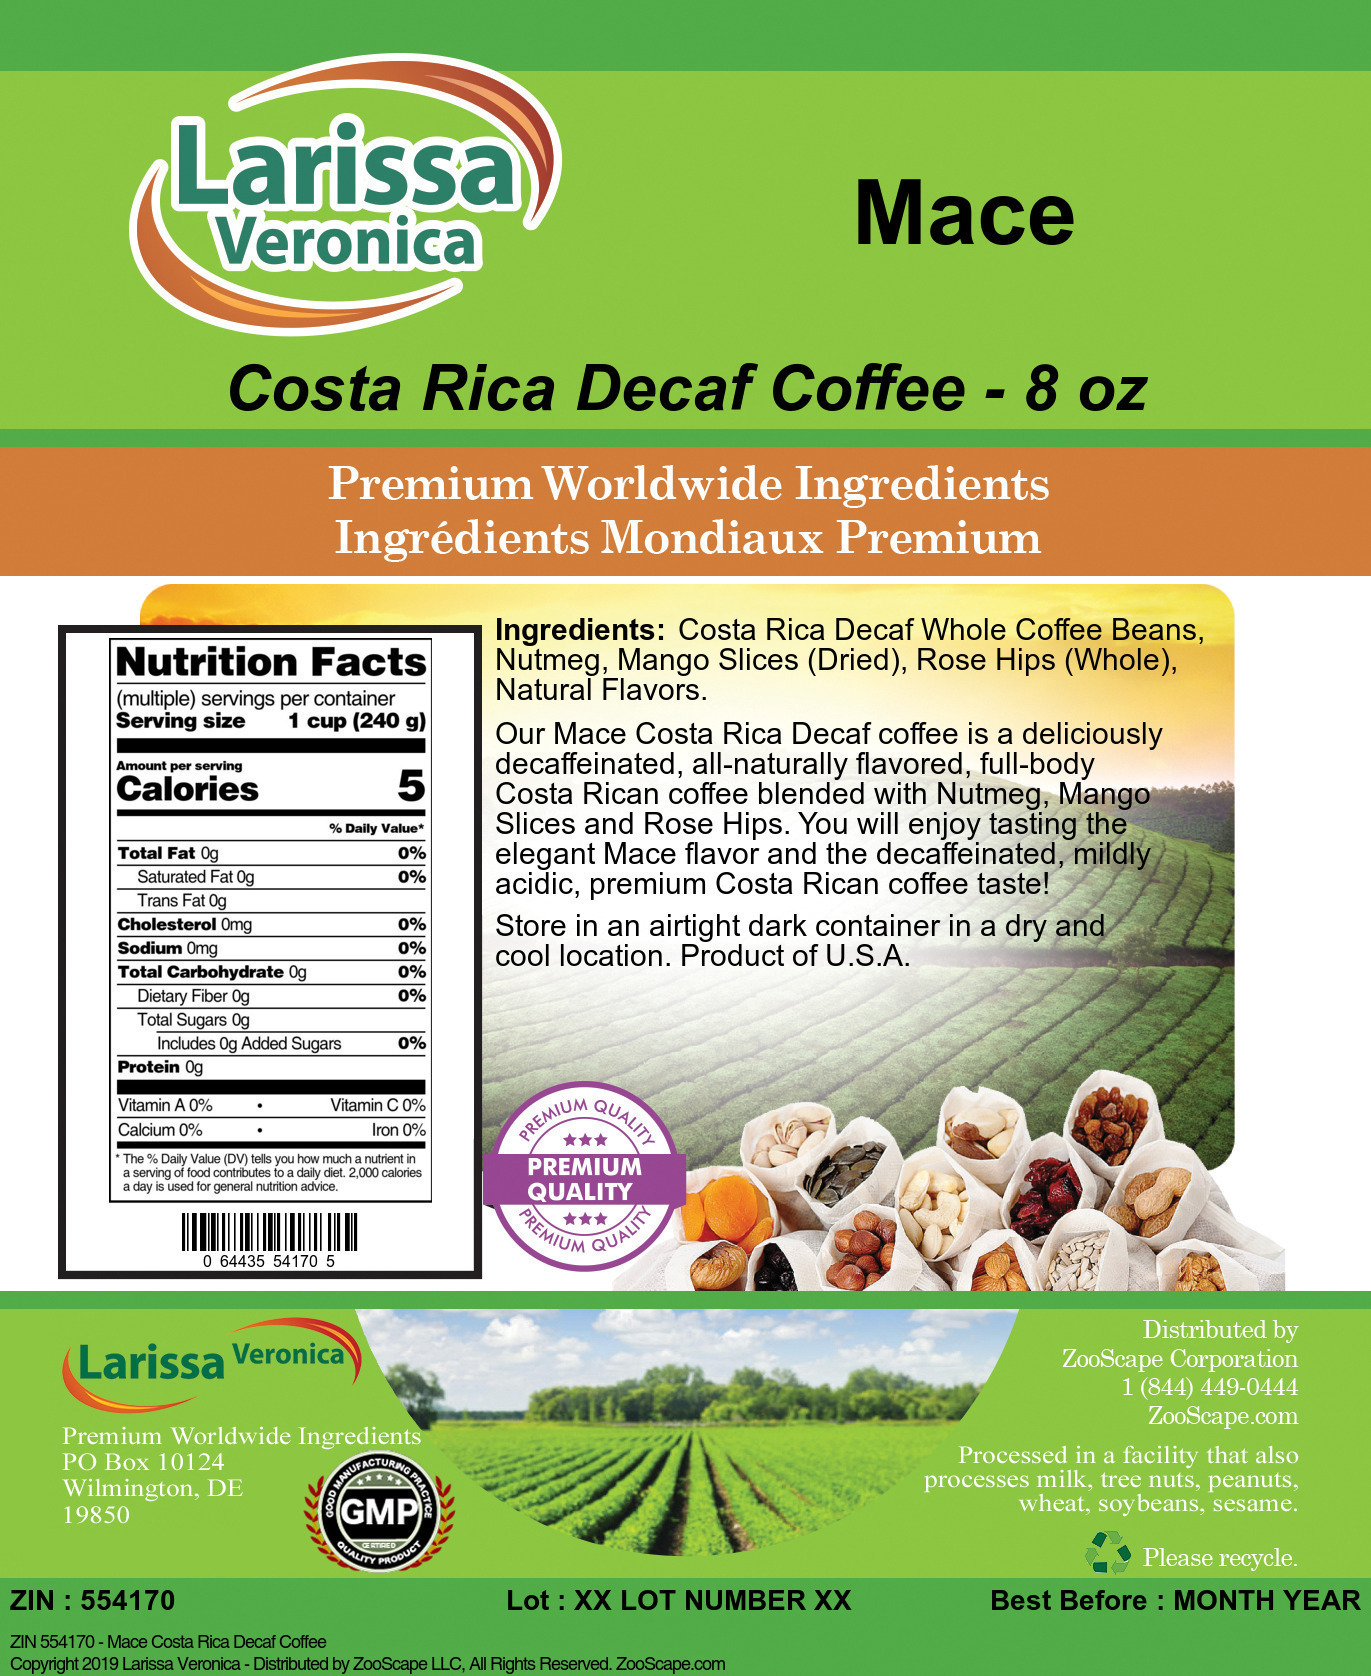 Mace Costa Rica Decaf Coffee - Label